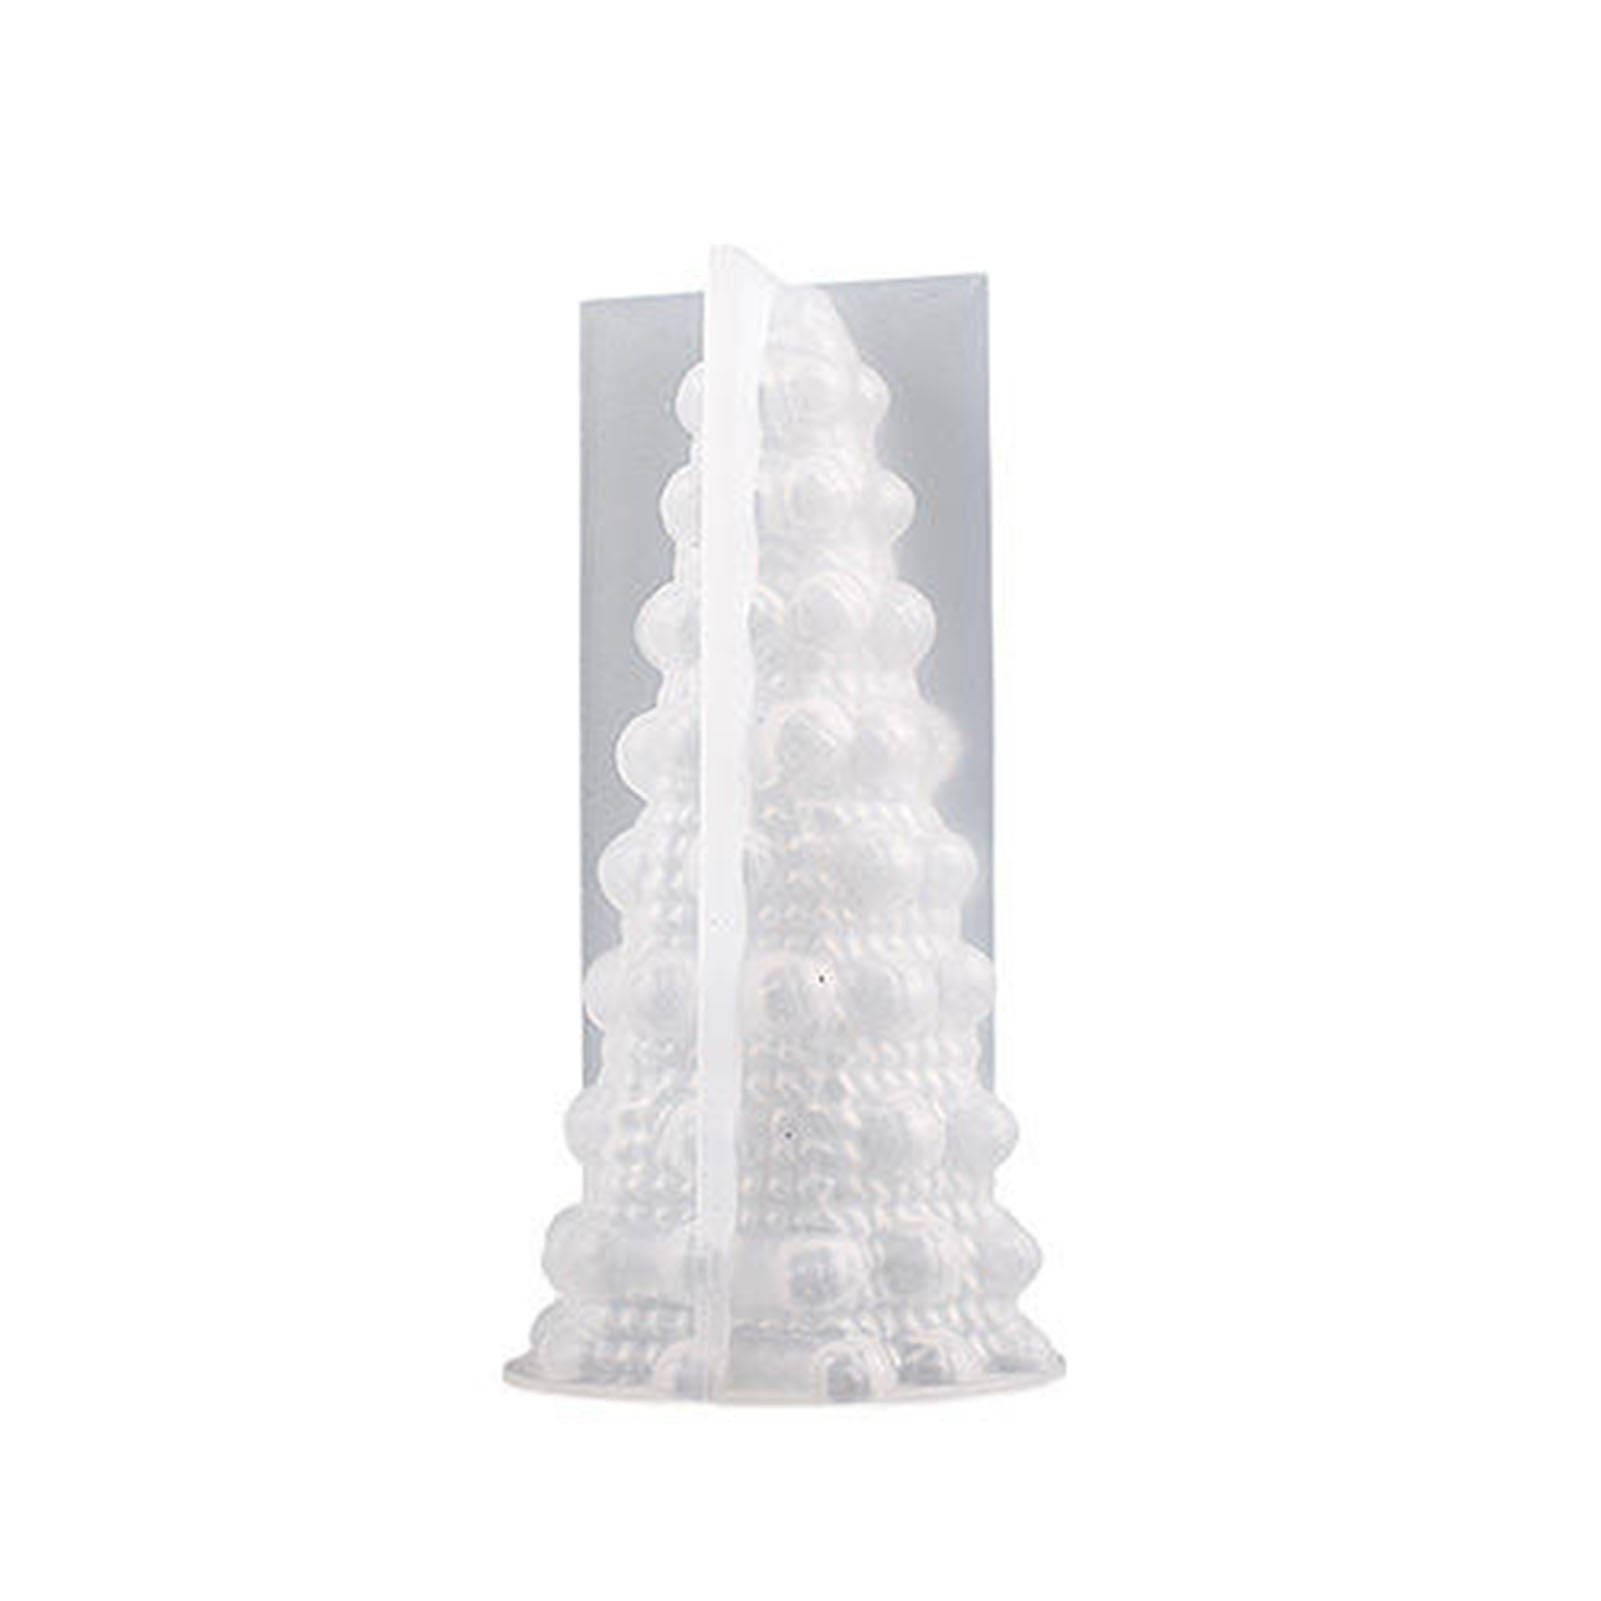 Blusmart Silikonform 3D-Kerzenform In Weihnachtsbaumform, Personalisierbar, Einfache, Silikonform bubble tree S